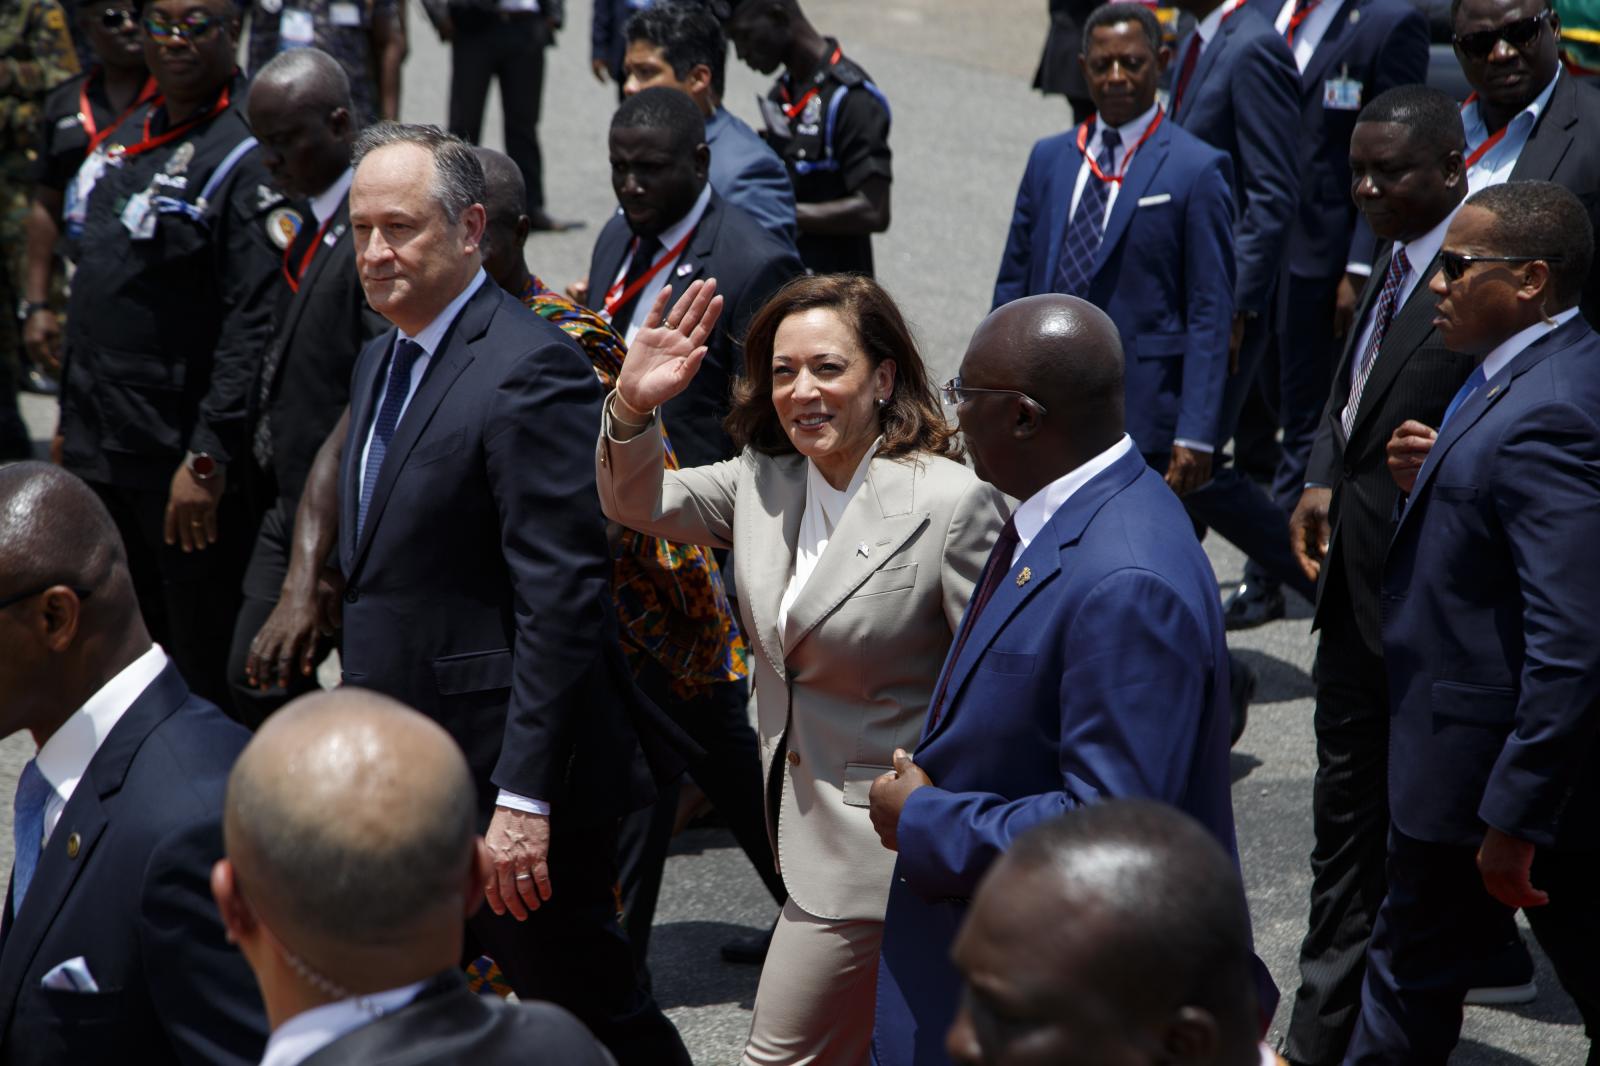 Image from U.S. Vice President Kamala Harris Visit To Ghana - U.S. Vice President Kamala Harris waves as she arrives in...